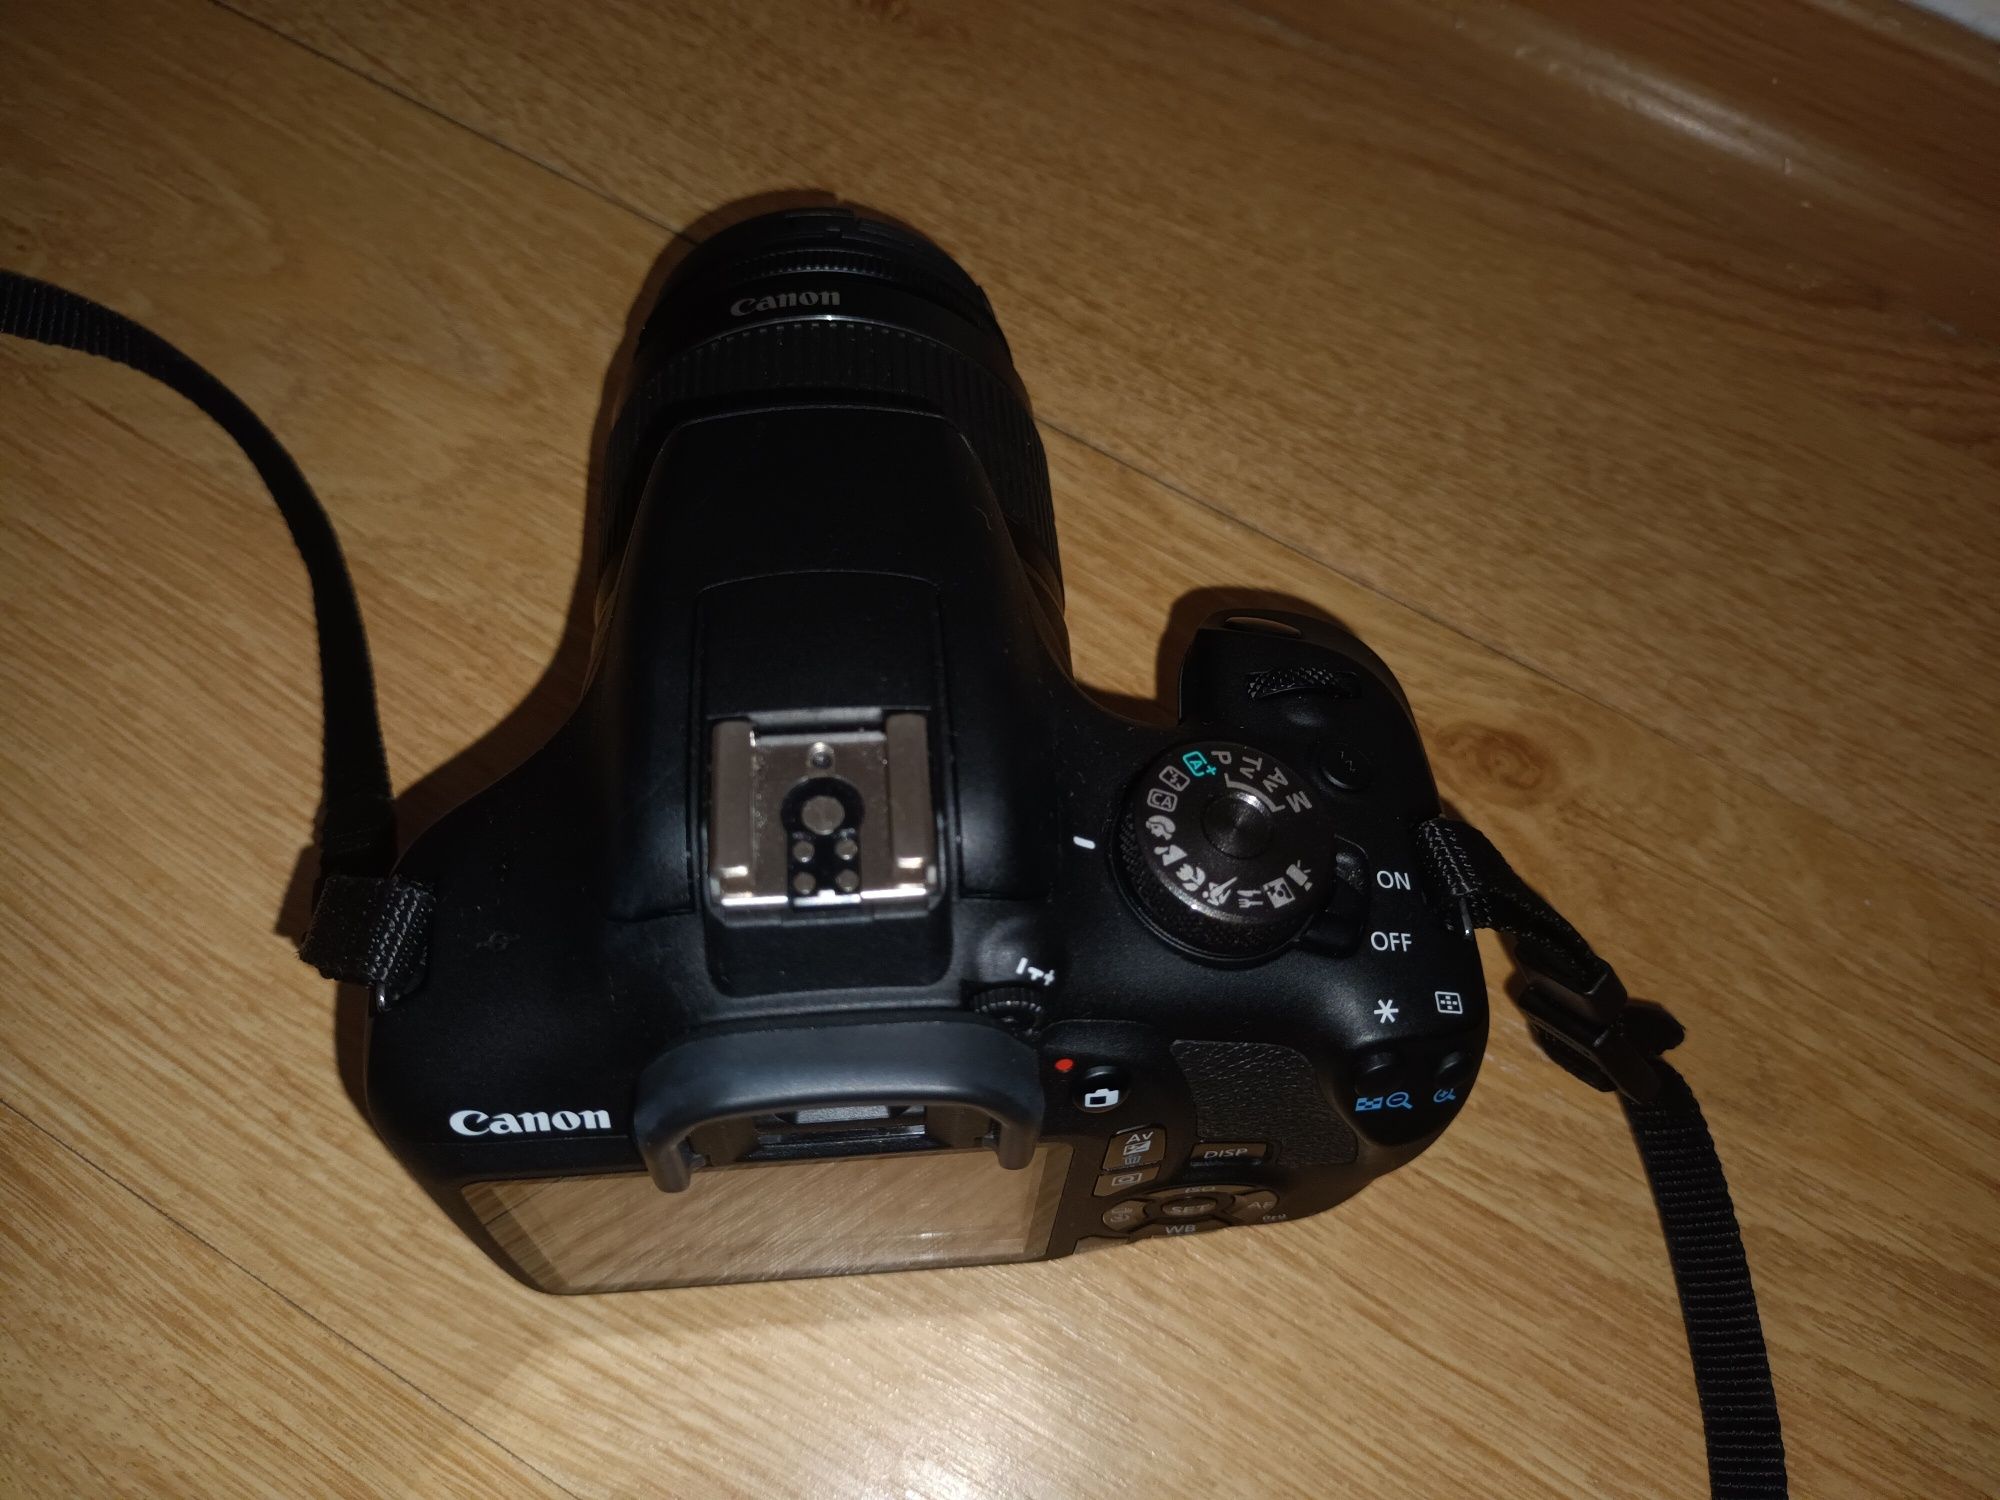 Camera foto cannon EOS 2000D din UK